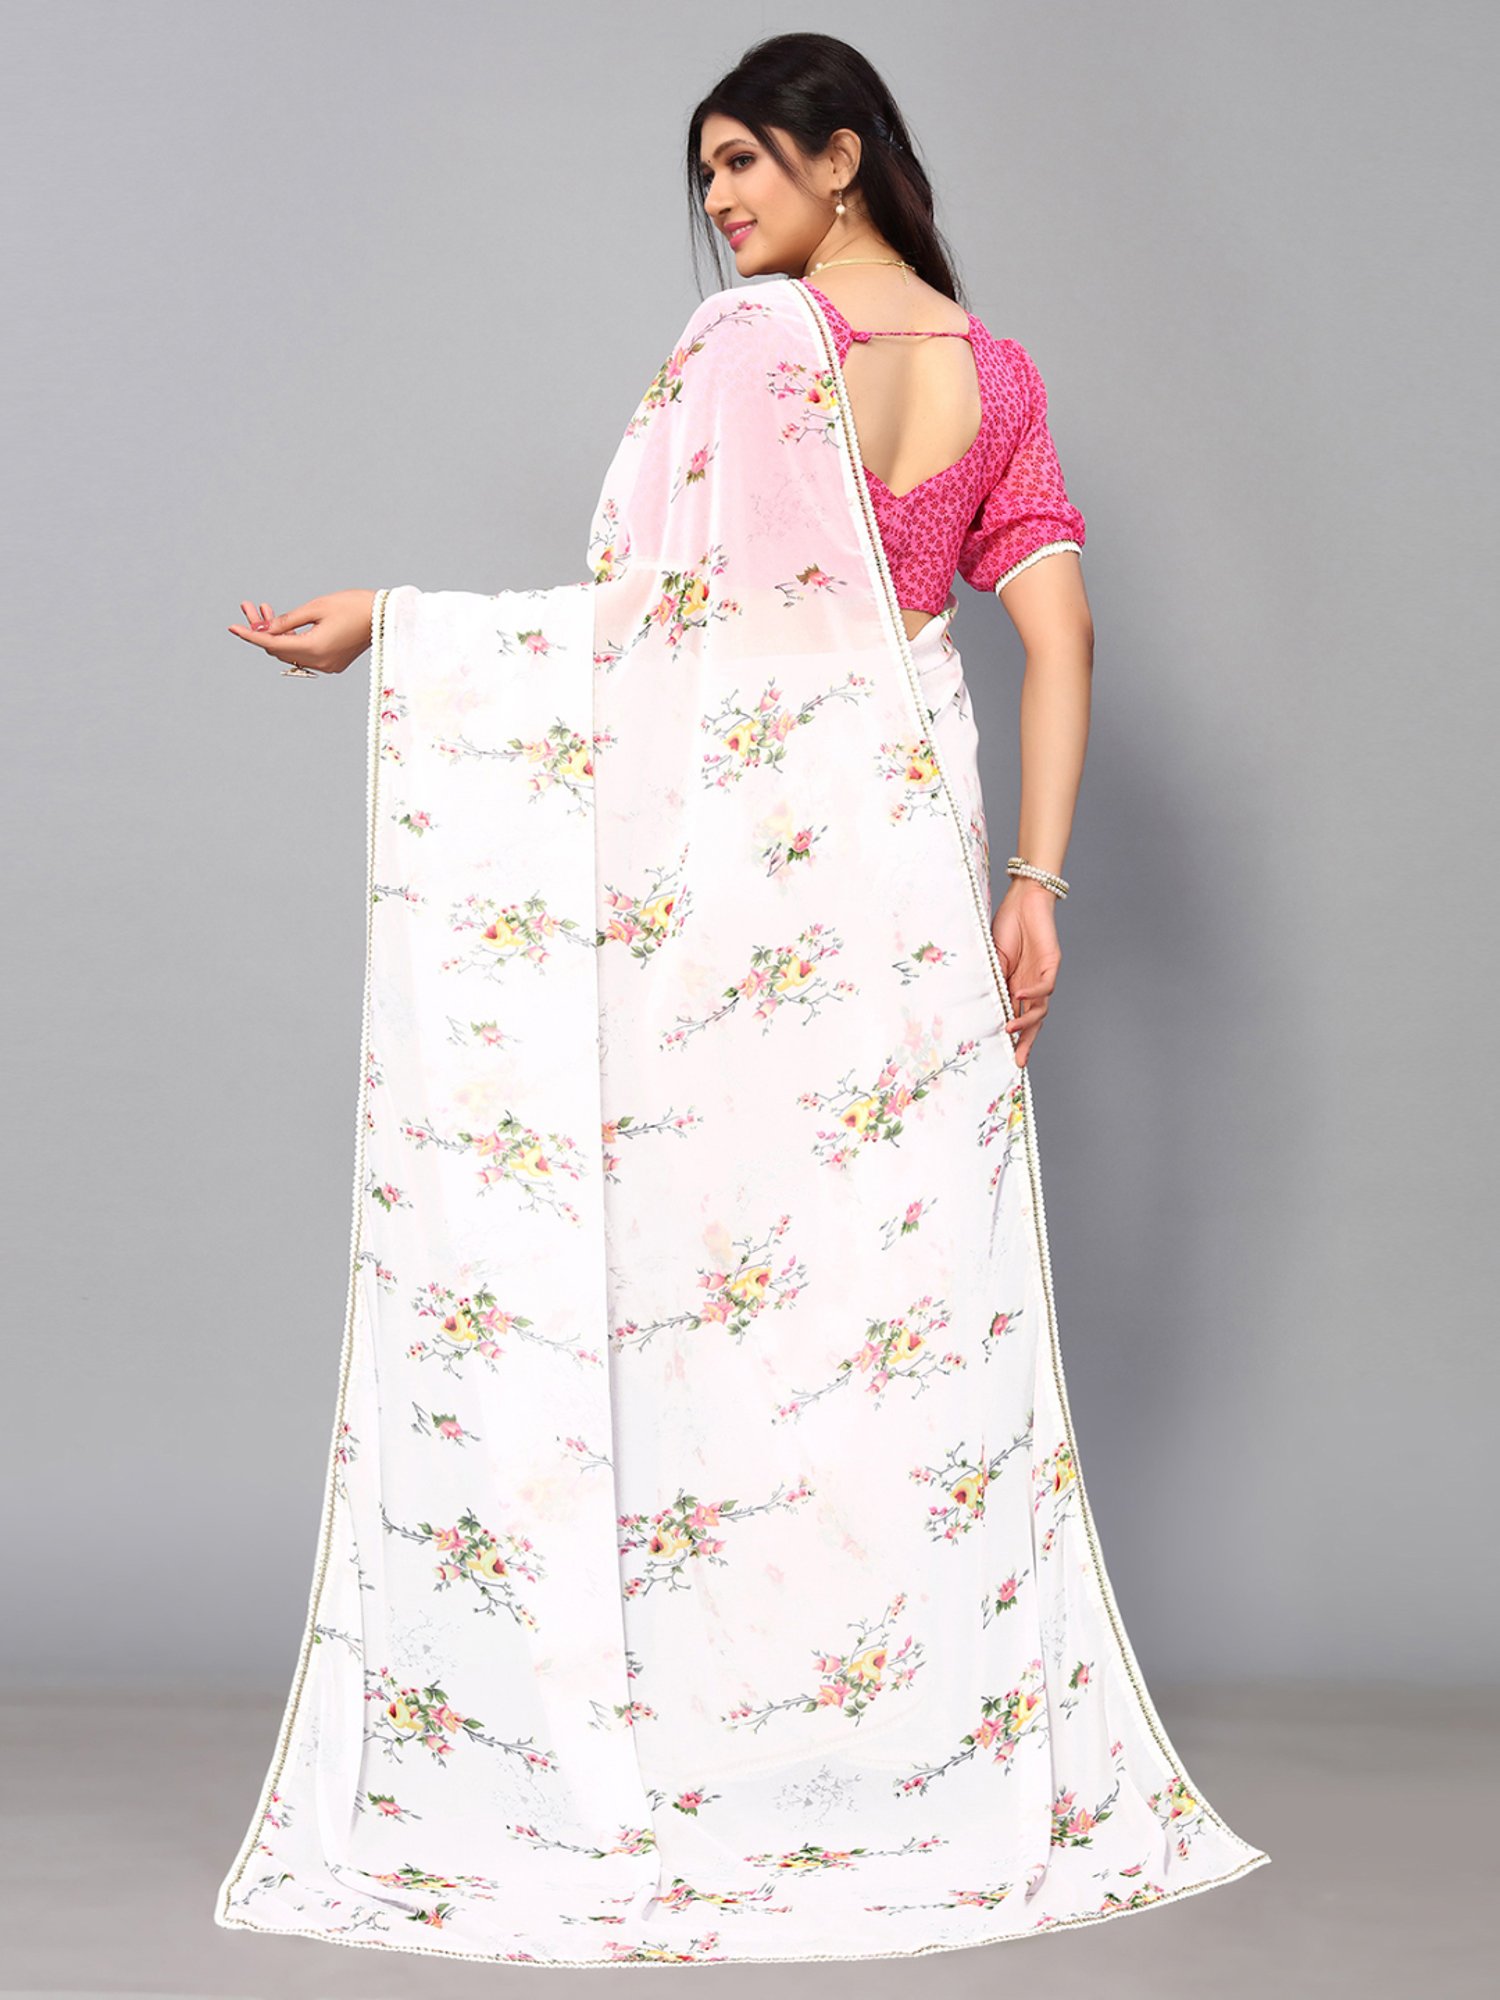 Cotton Full Sleeve SATRANI FLORAL PRINTED CROPTOP 430TK385, White at Rs  235/piece in Surat